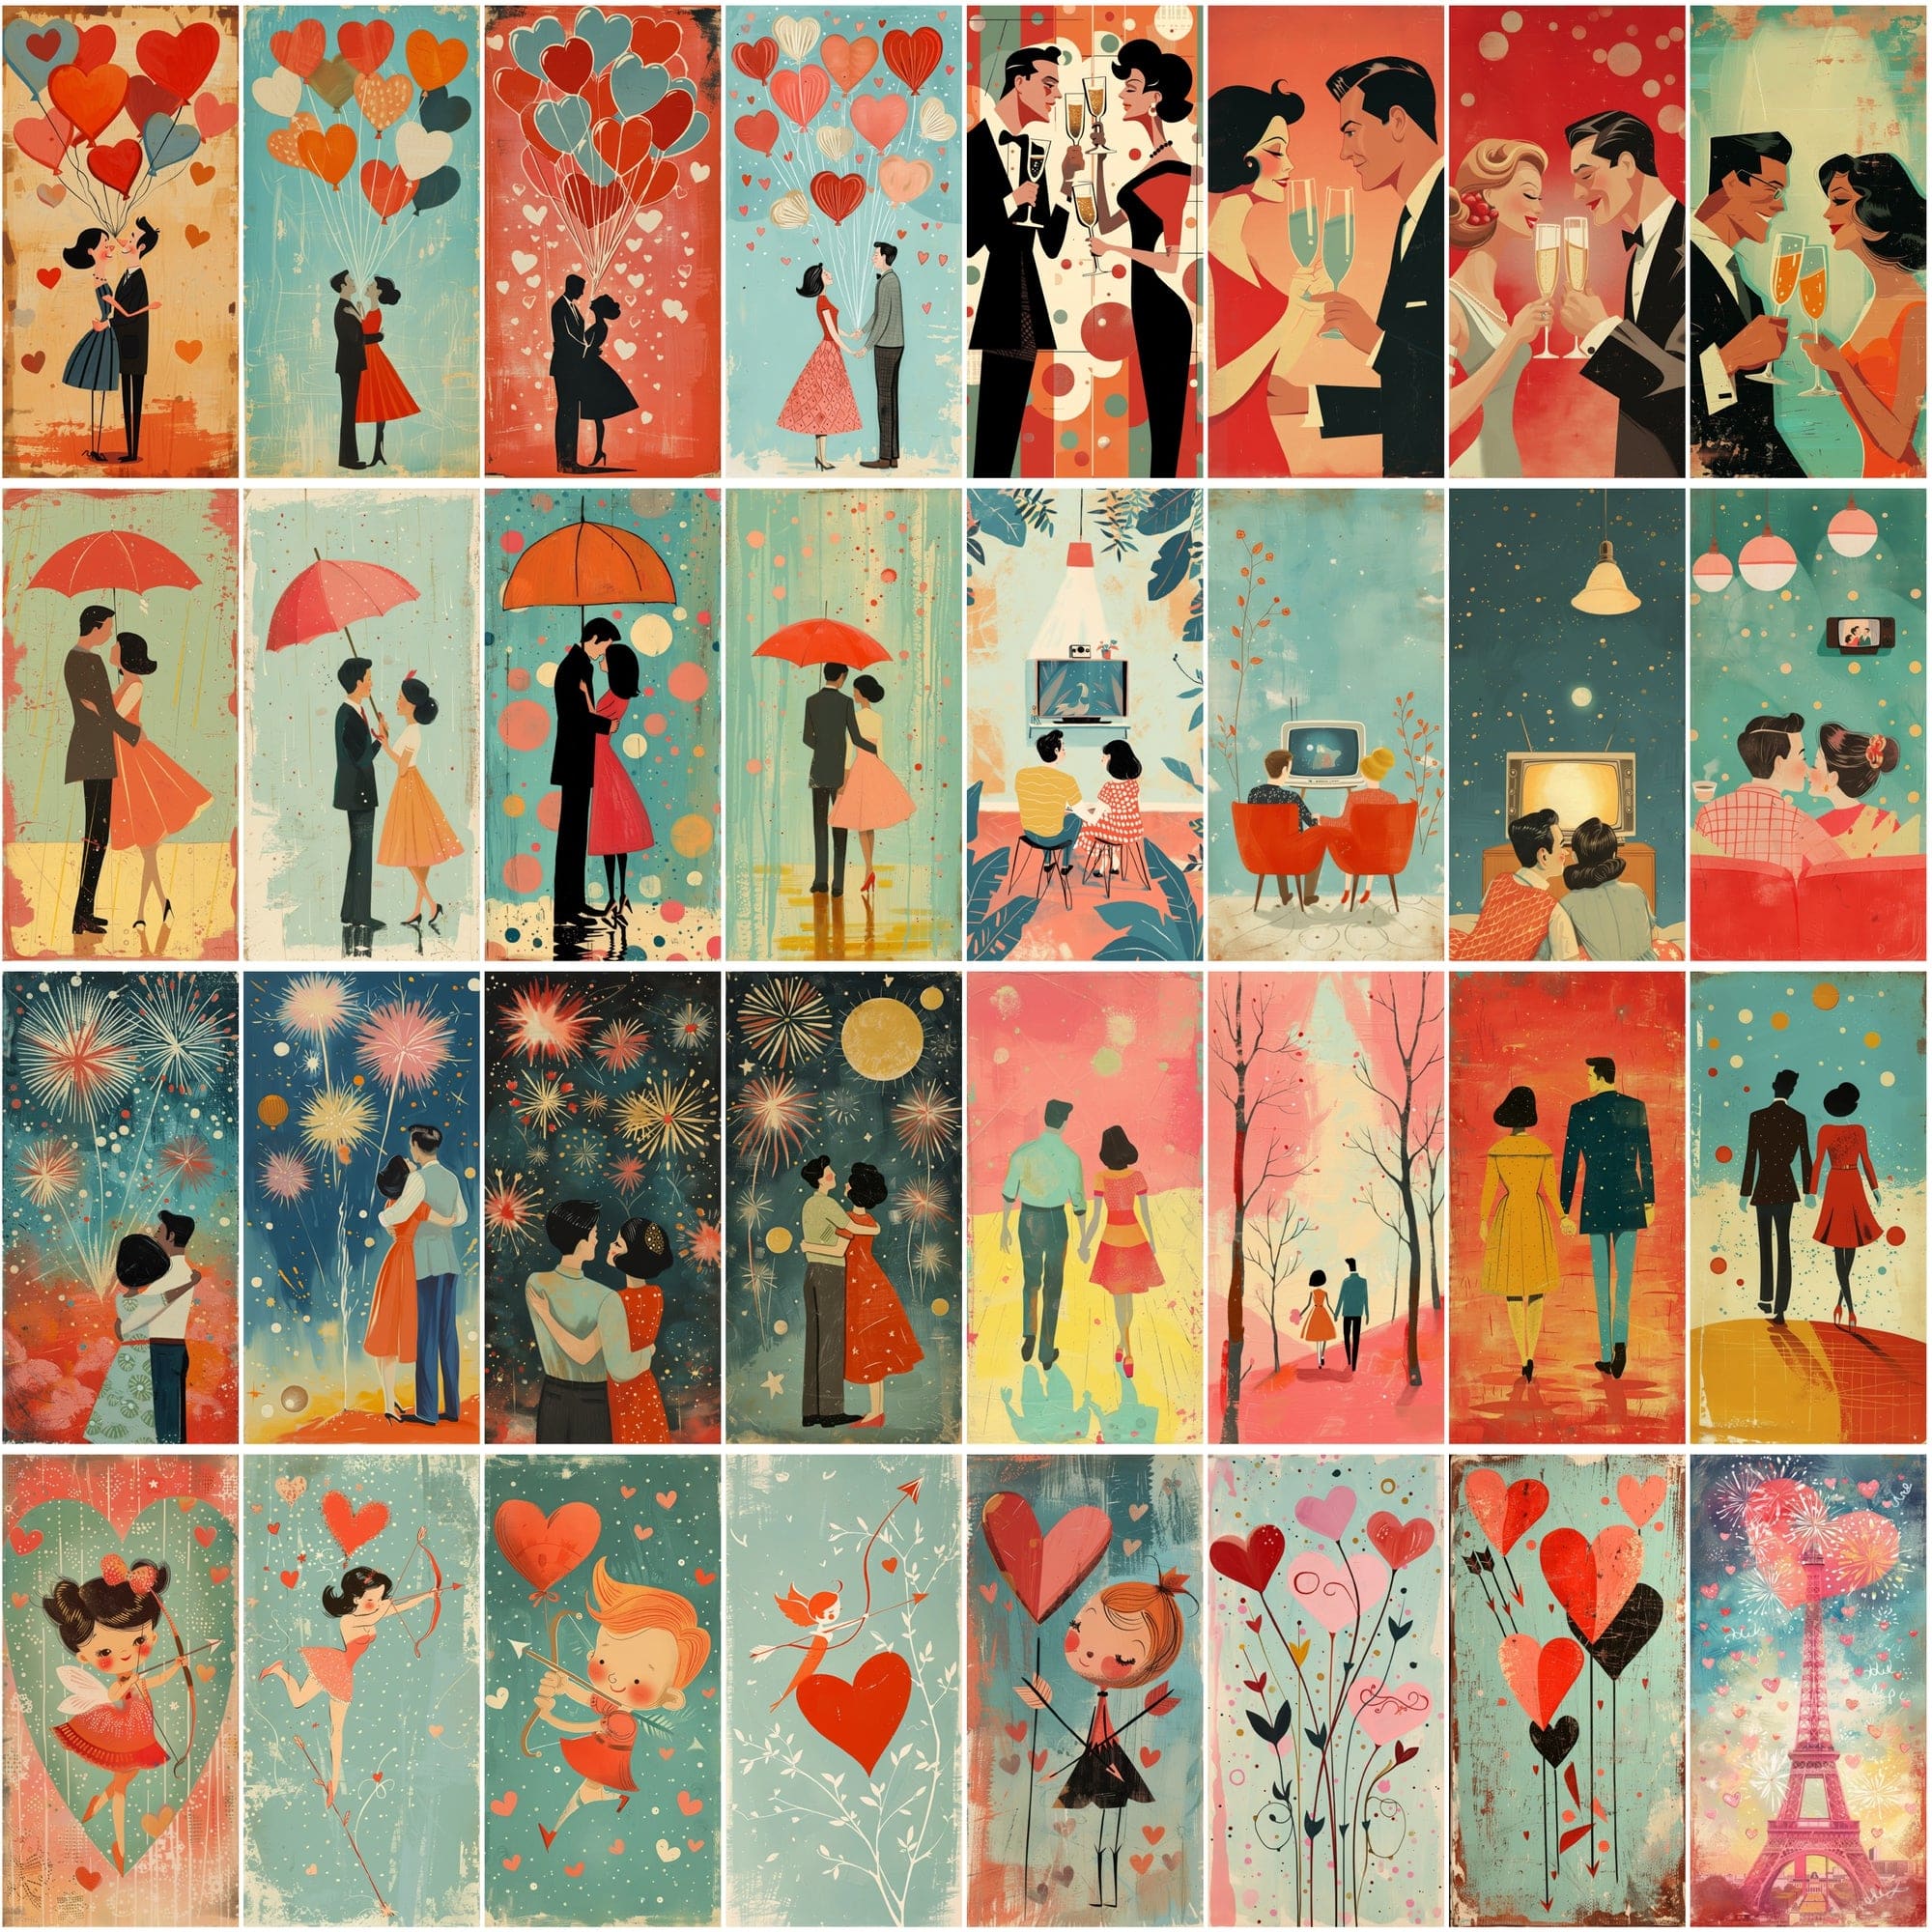 380 Unique, Hard-to-Find Retro Love Posters Digital Download Sumobundle